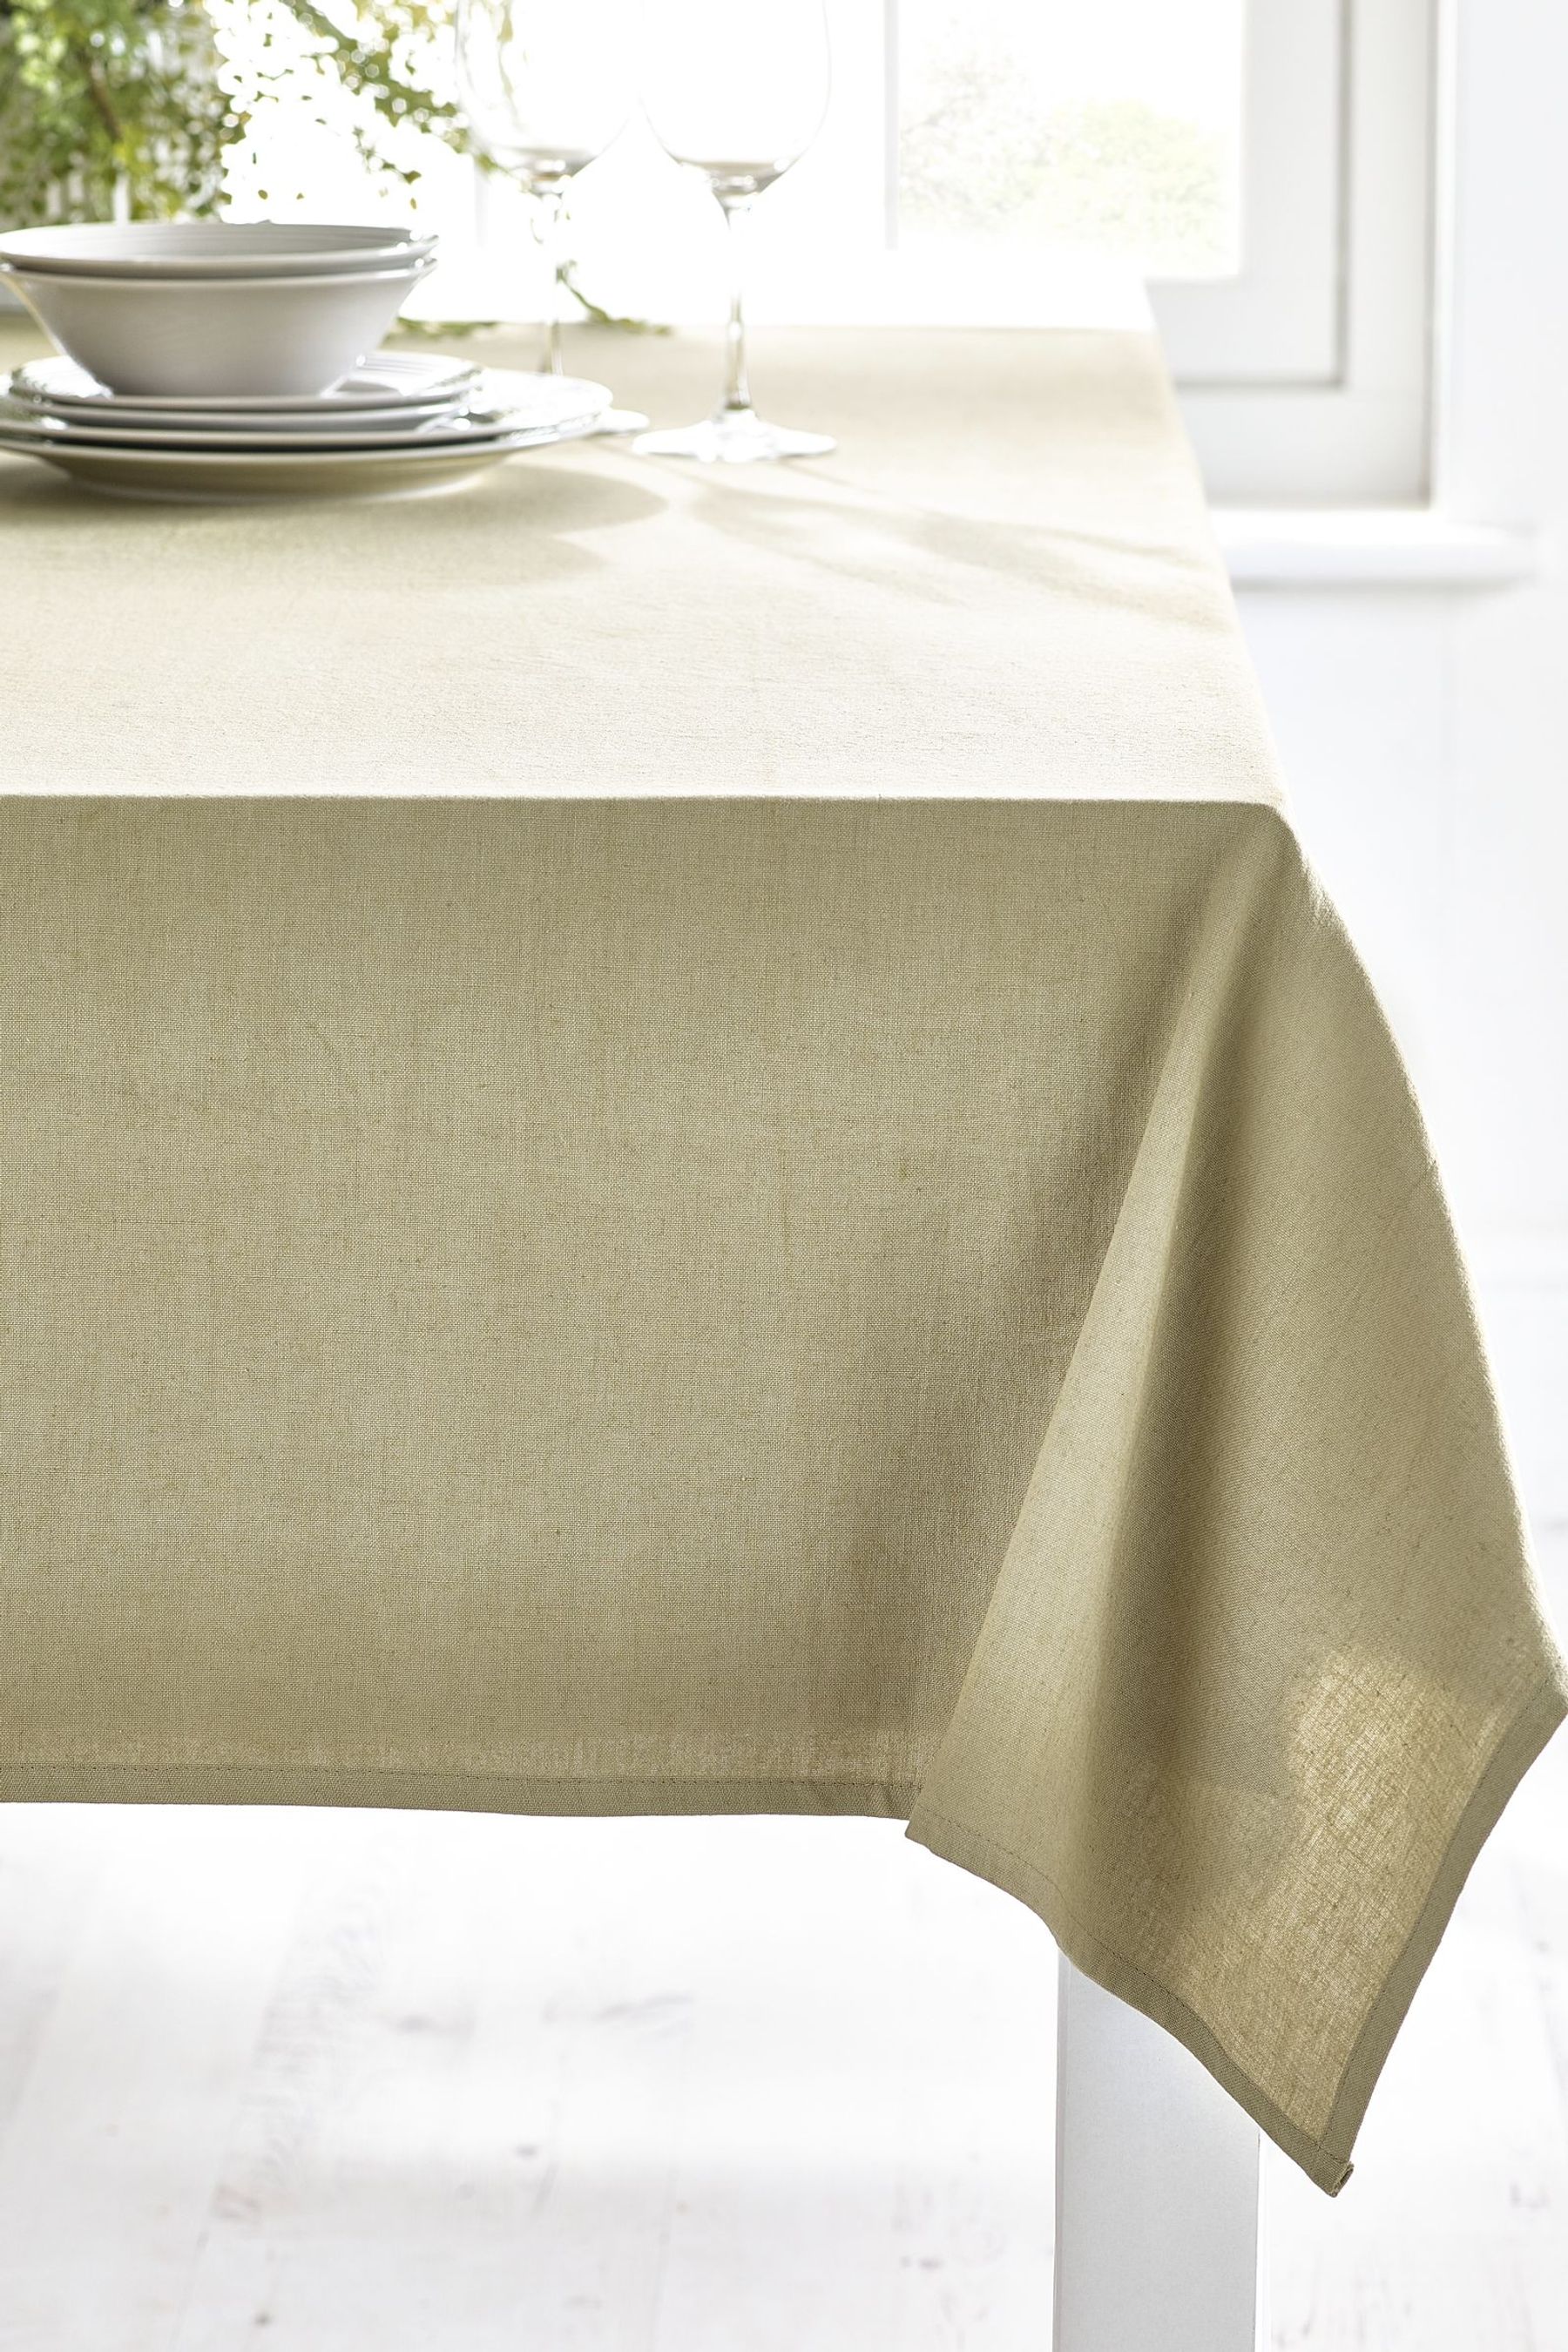 443-540s Table Cloth